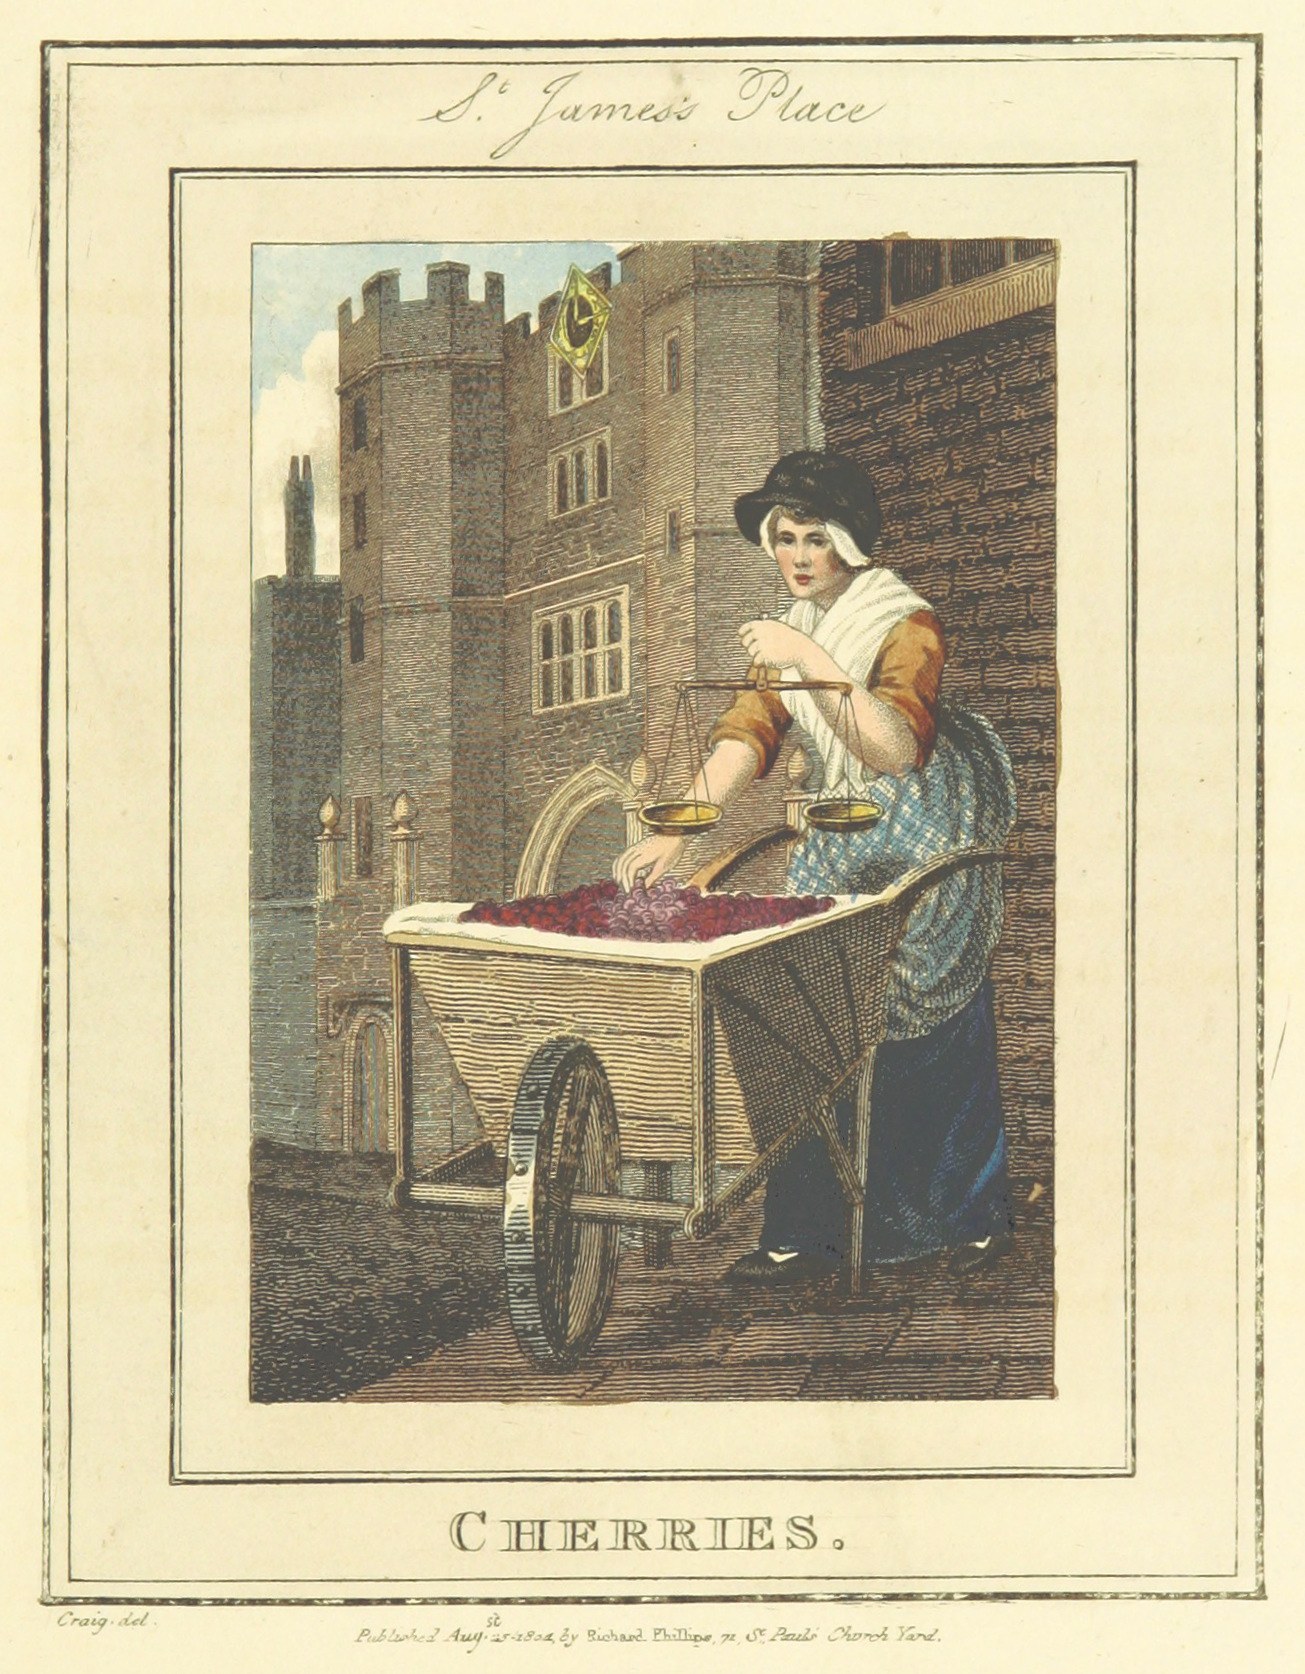 Phillips(1804)_p585_-_St_Jamess_Place_-_Cherries